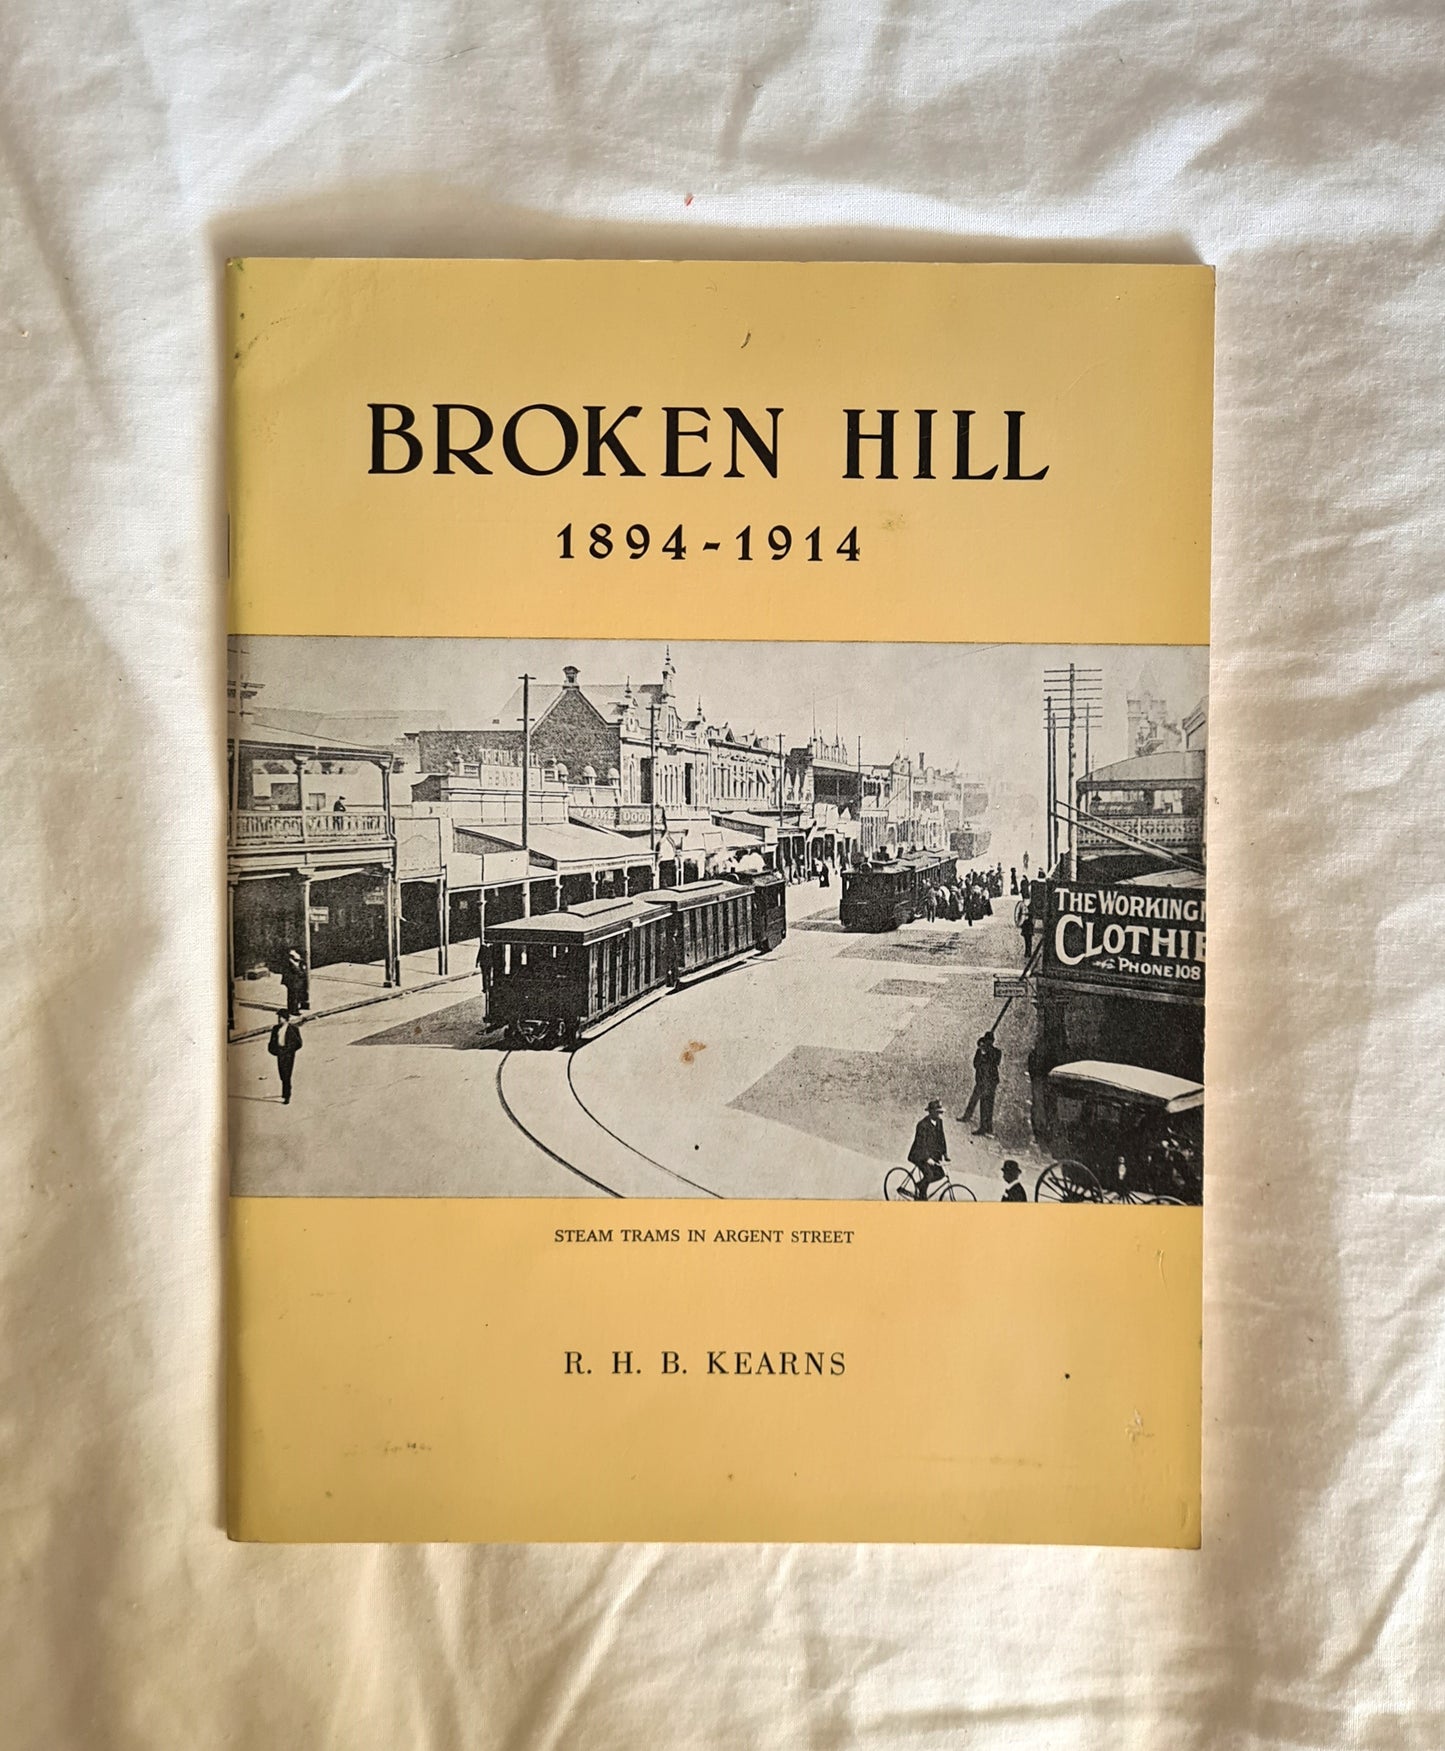 Broken Hill  Volume 2 1894-1914  The Uncertain Years  by R. H. B. Kearns